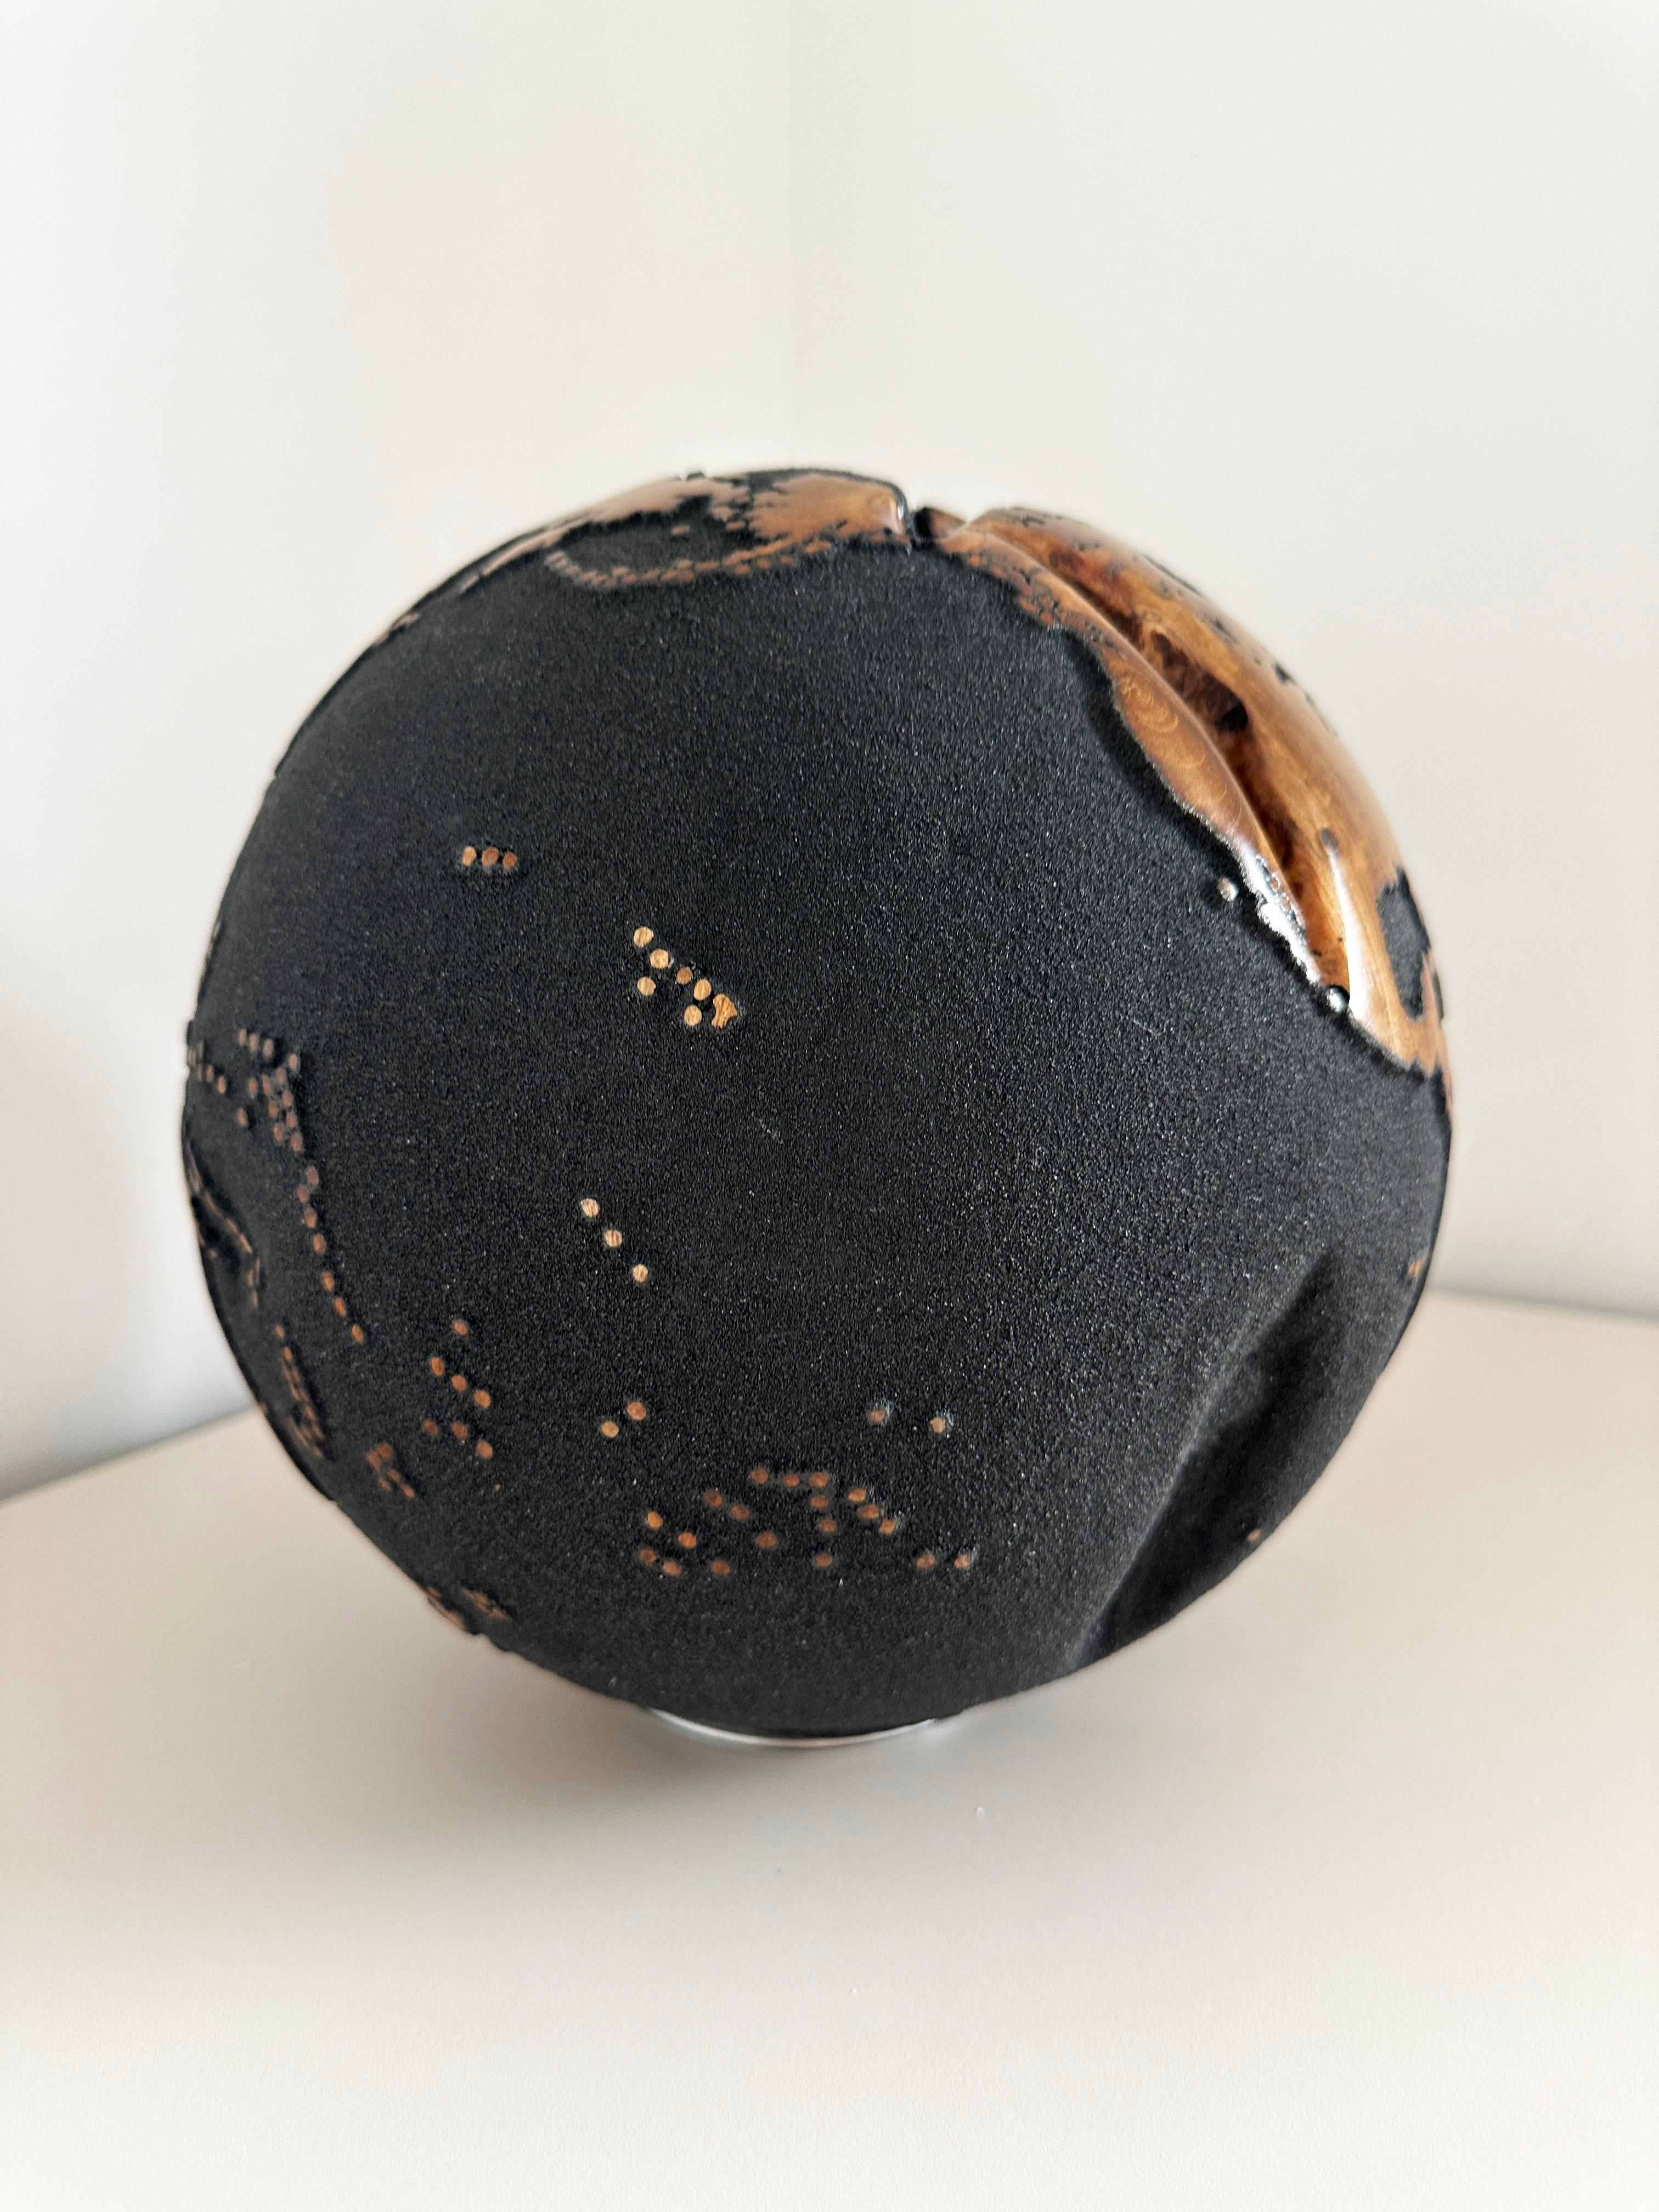 Around the Globe Black Teak by Bruno Helgen - wood globe sculpture  For Sale 7